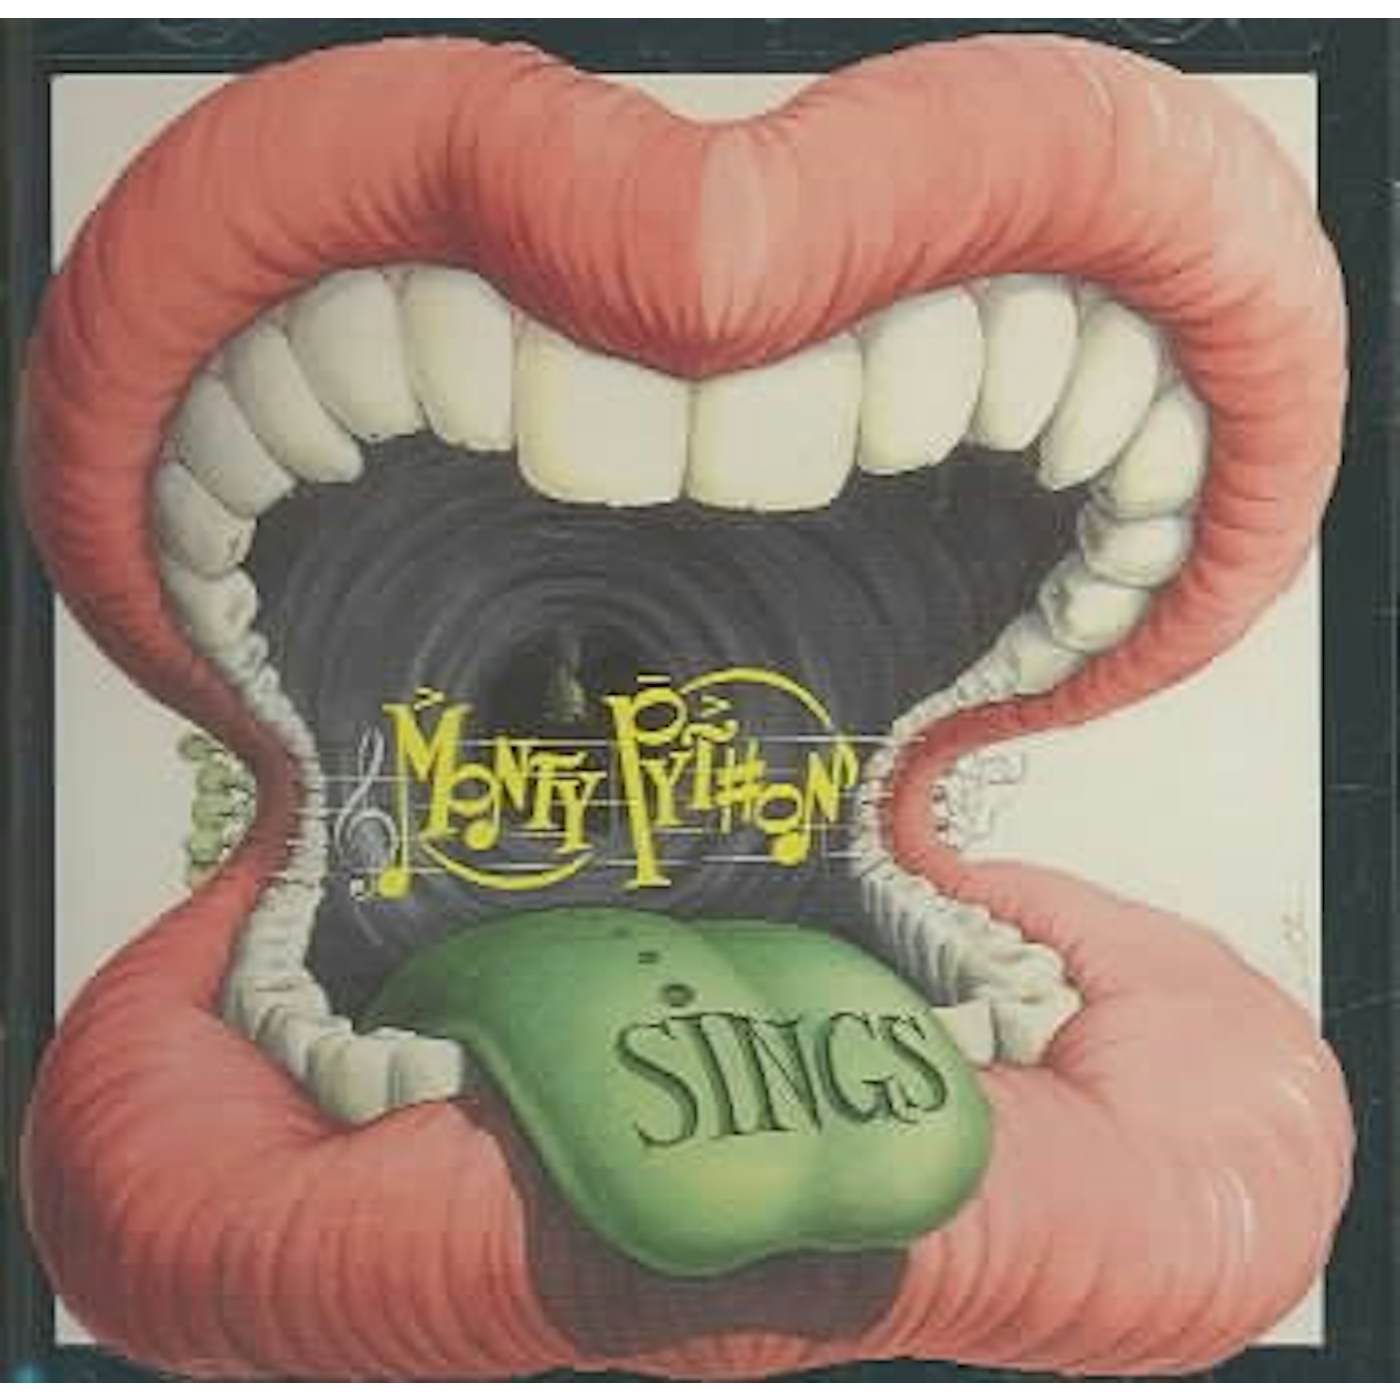 Monty Python Sings CD